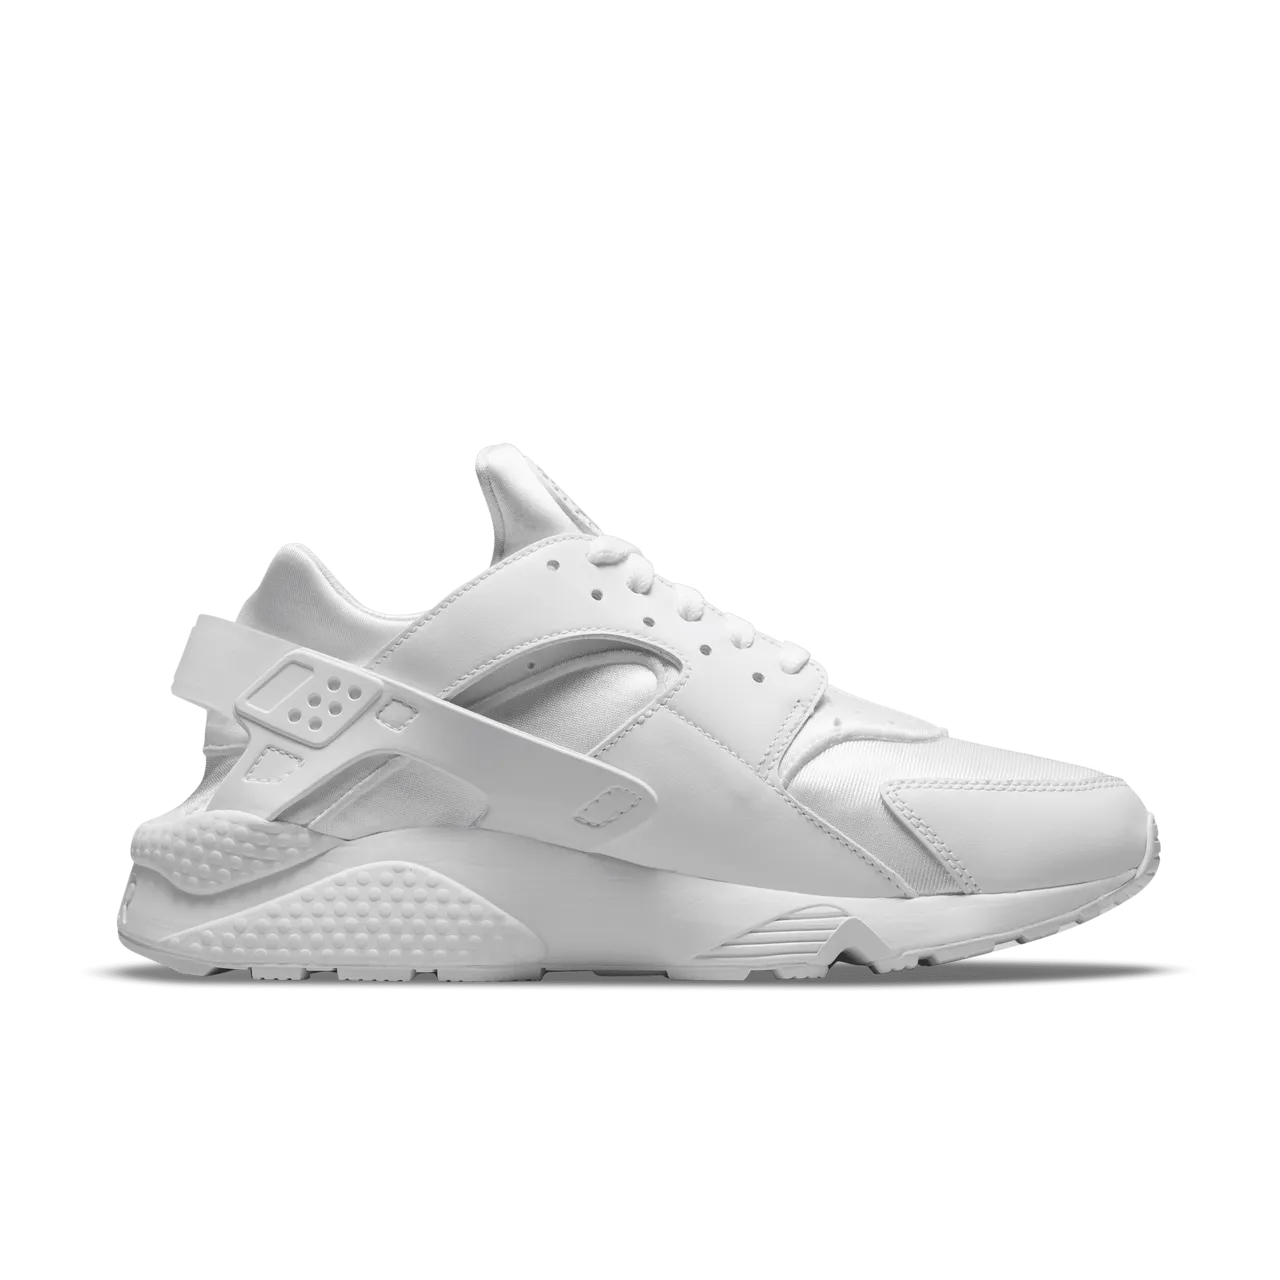 Nike Air Huarache Men's Shoes - White - Leather